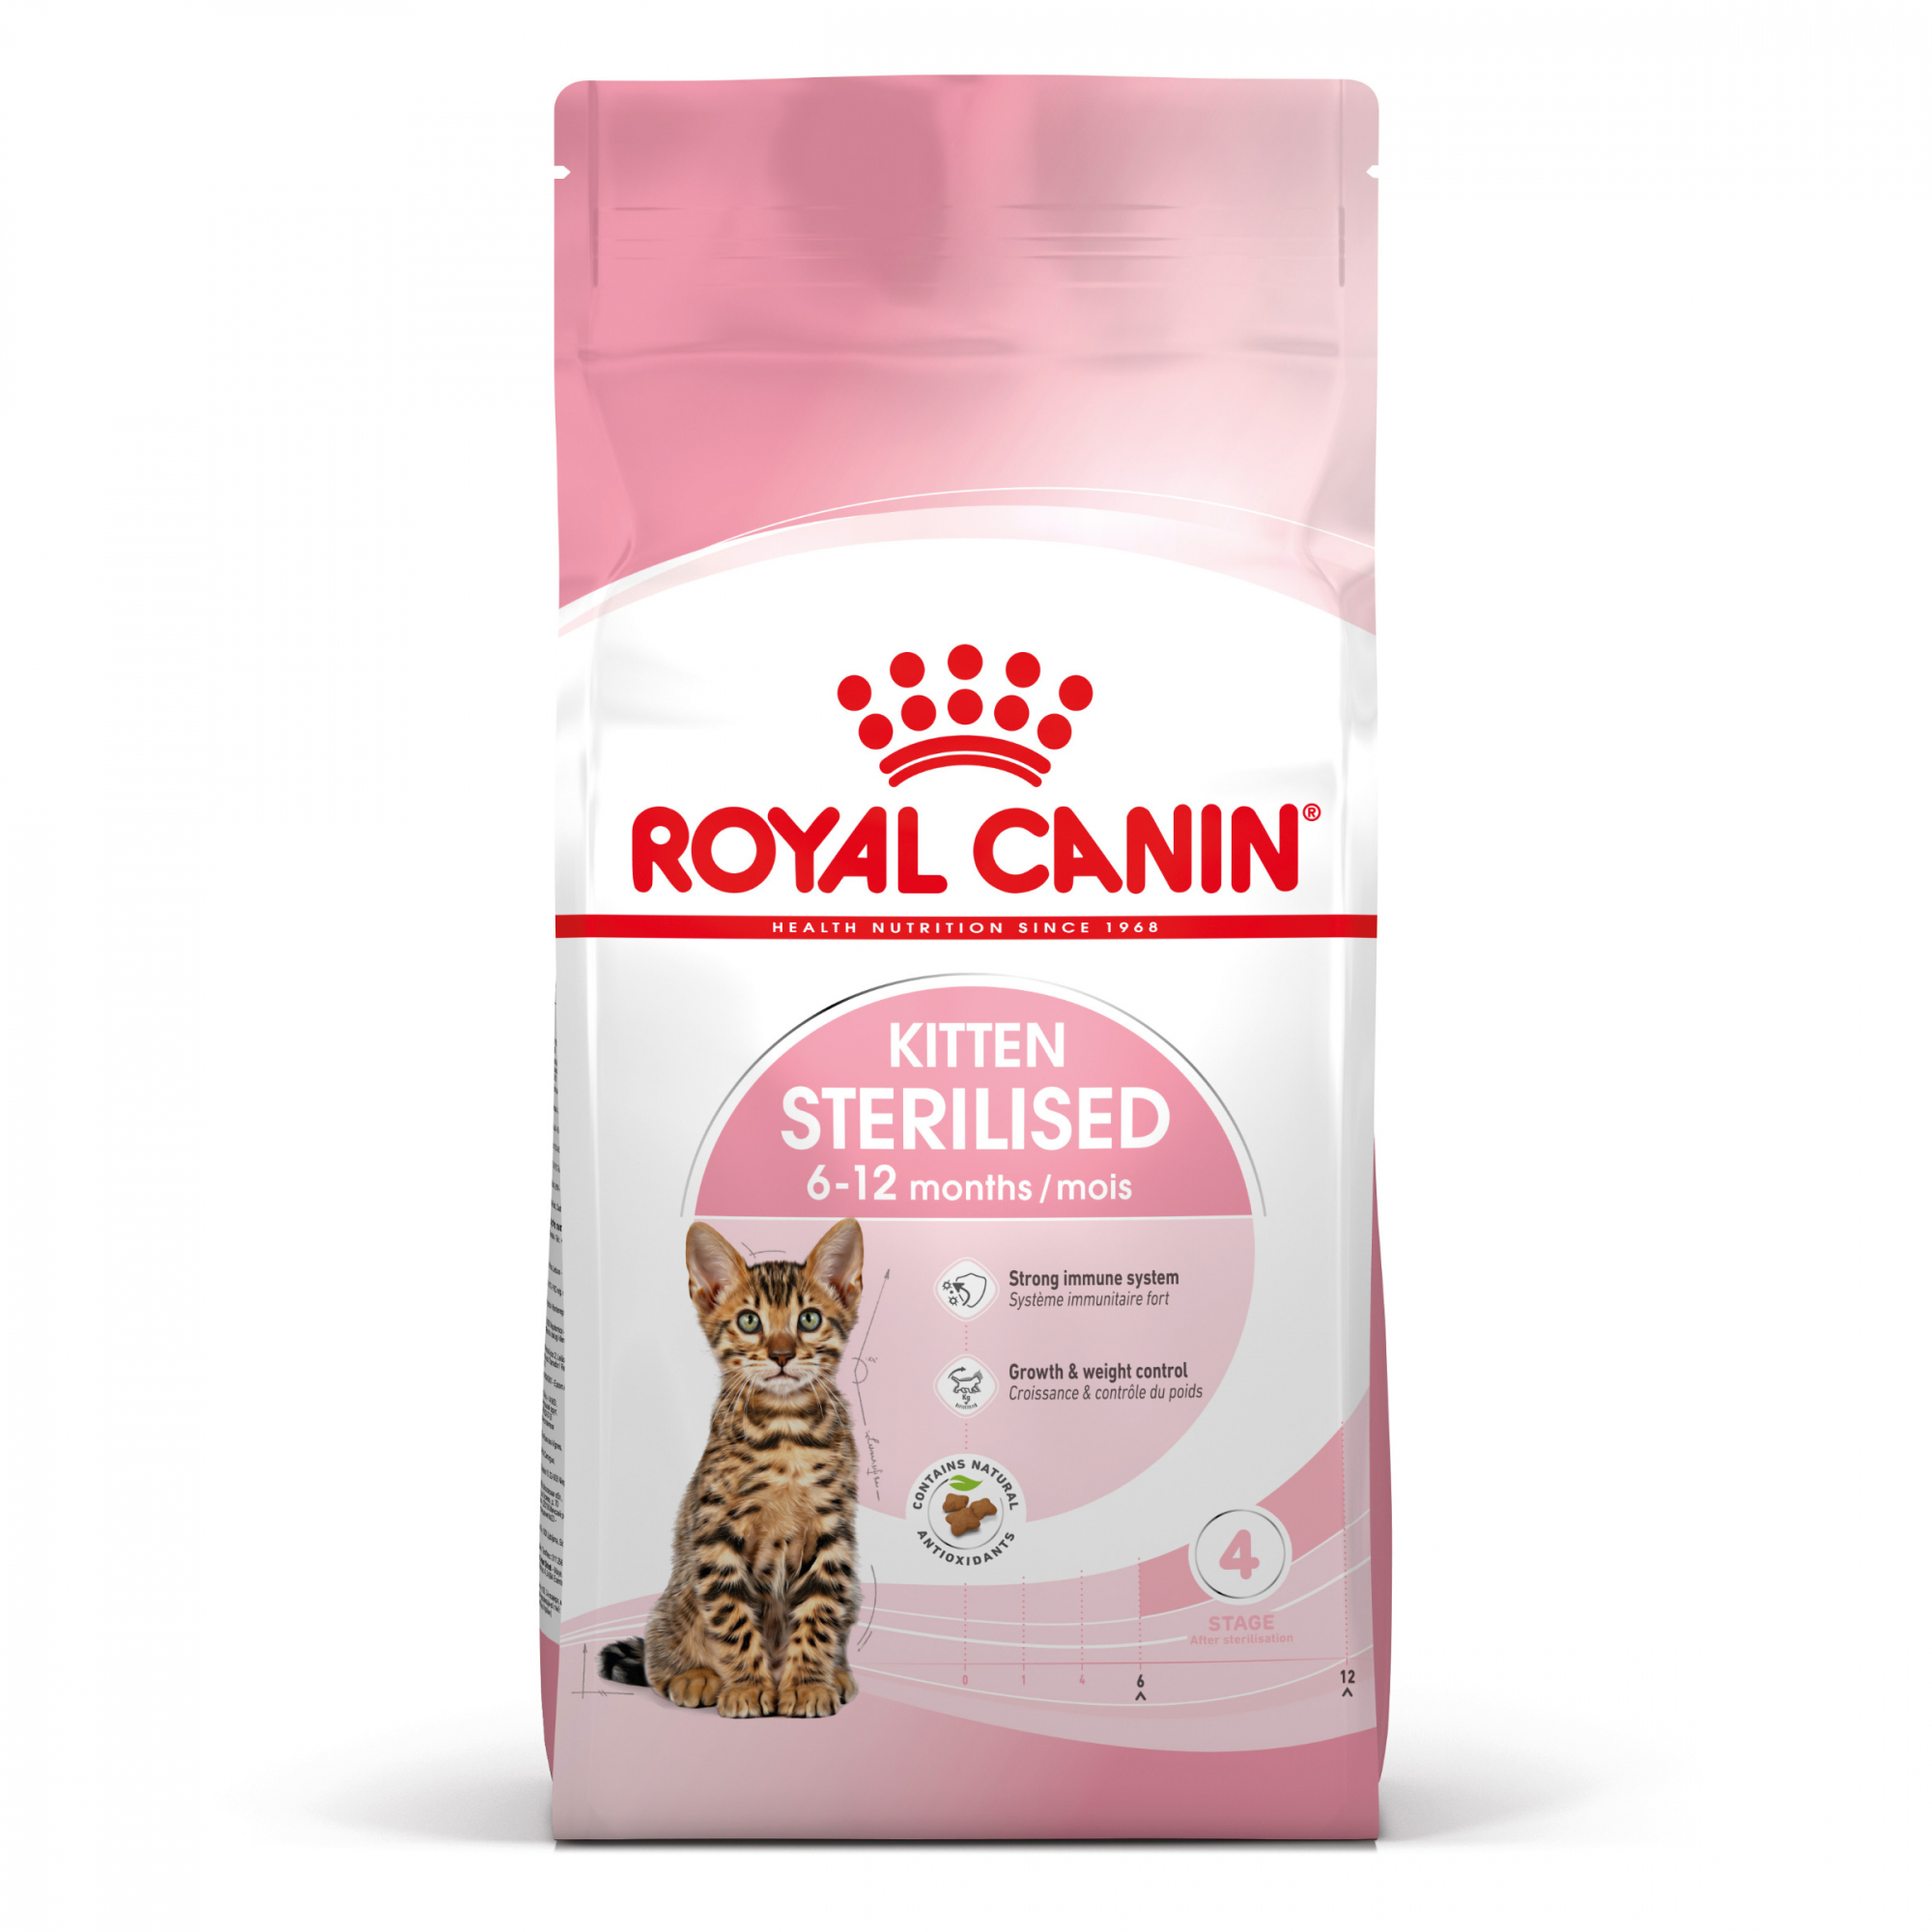 Royal Canin Kitten Sterilised dai 6 ai 12 mesi